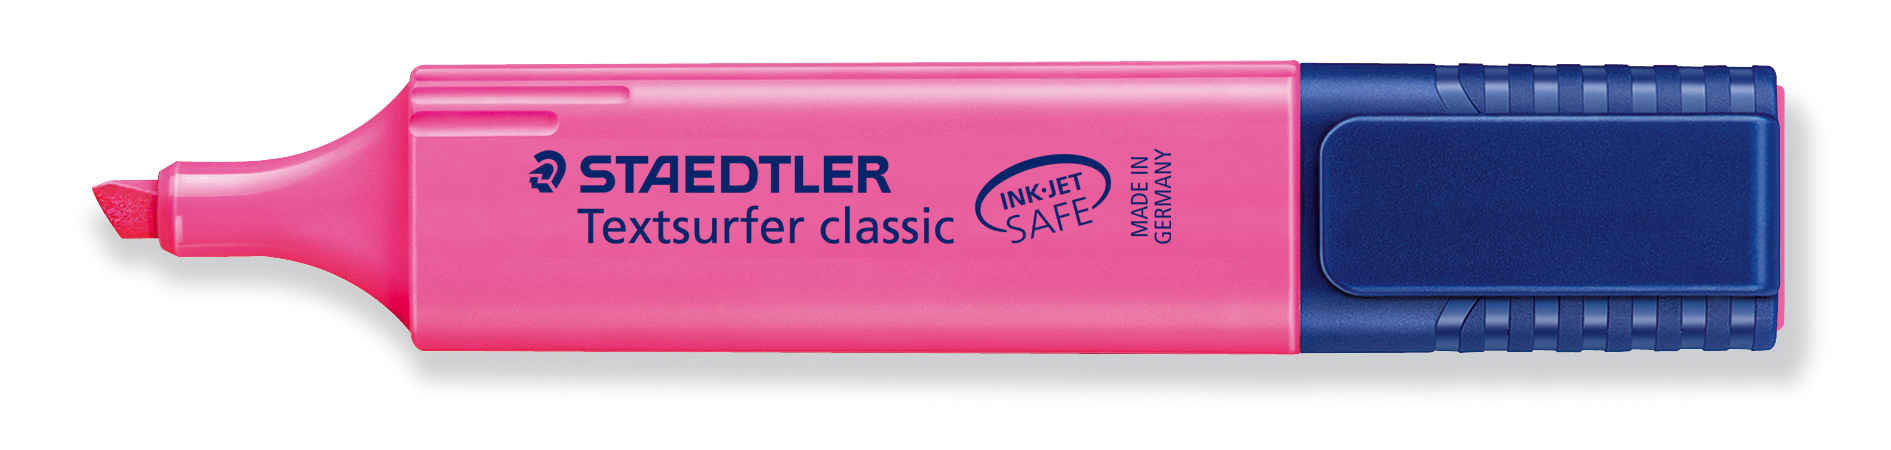 STAEDTLER Textsurfer Classic 364-23 rosa